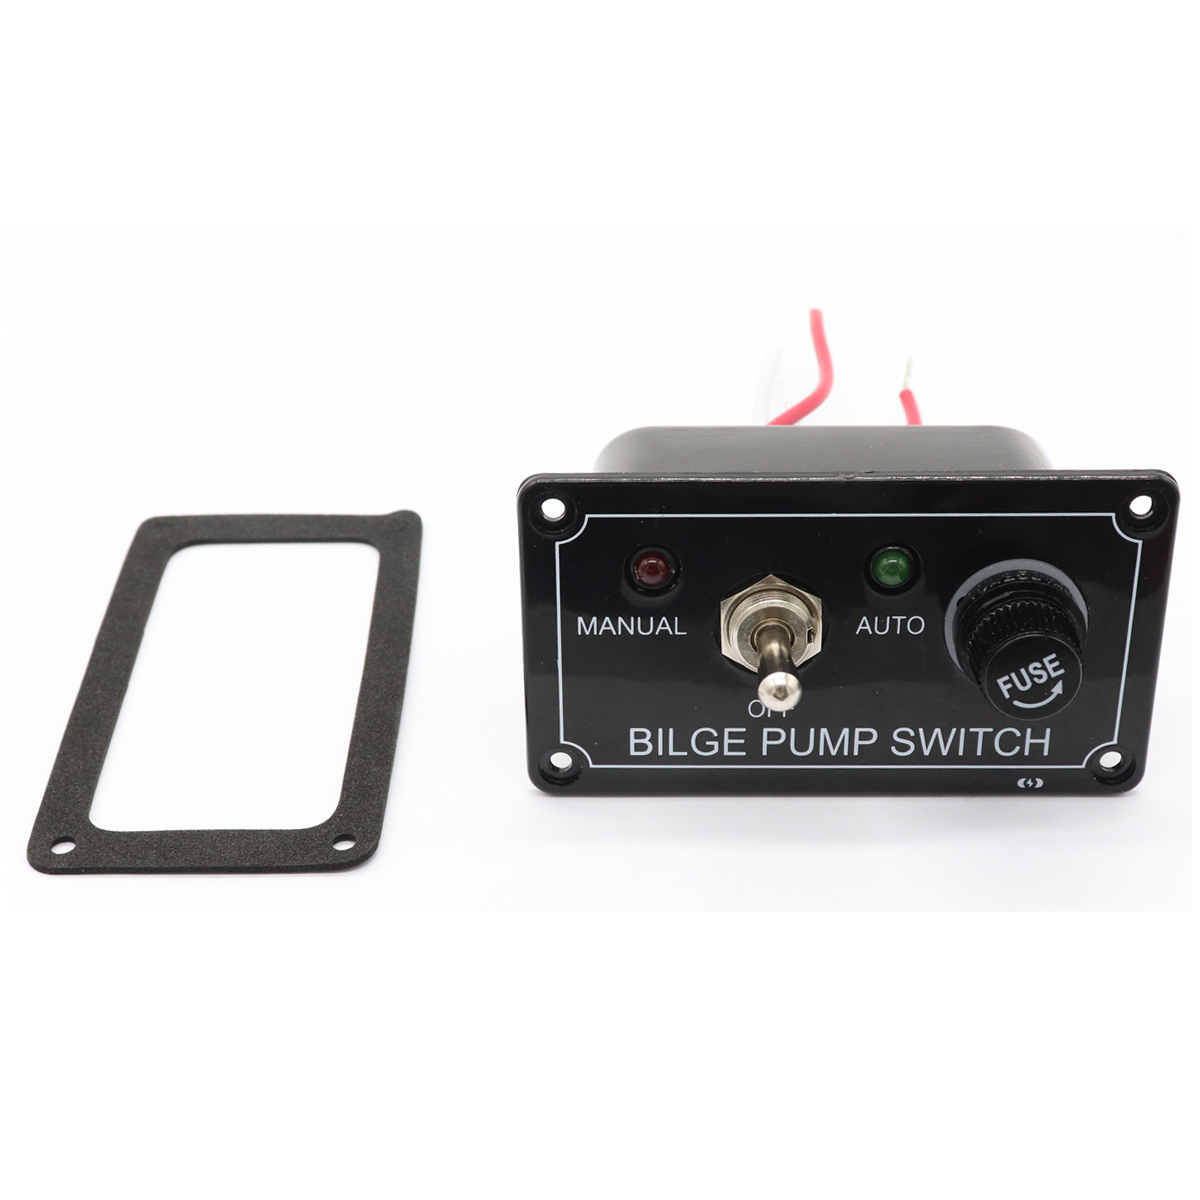 12V-LED-Indicator-Bilge-Pump-Switch-Panel-Housing-3-Way-Panel-Manual--Off--Auto-RV-Marine-Boat-1340425-4